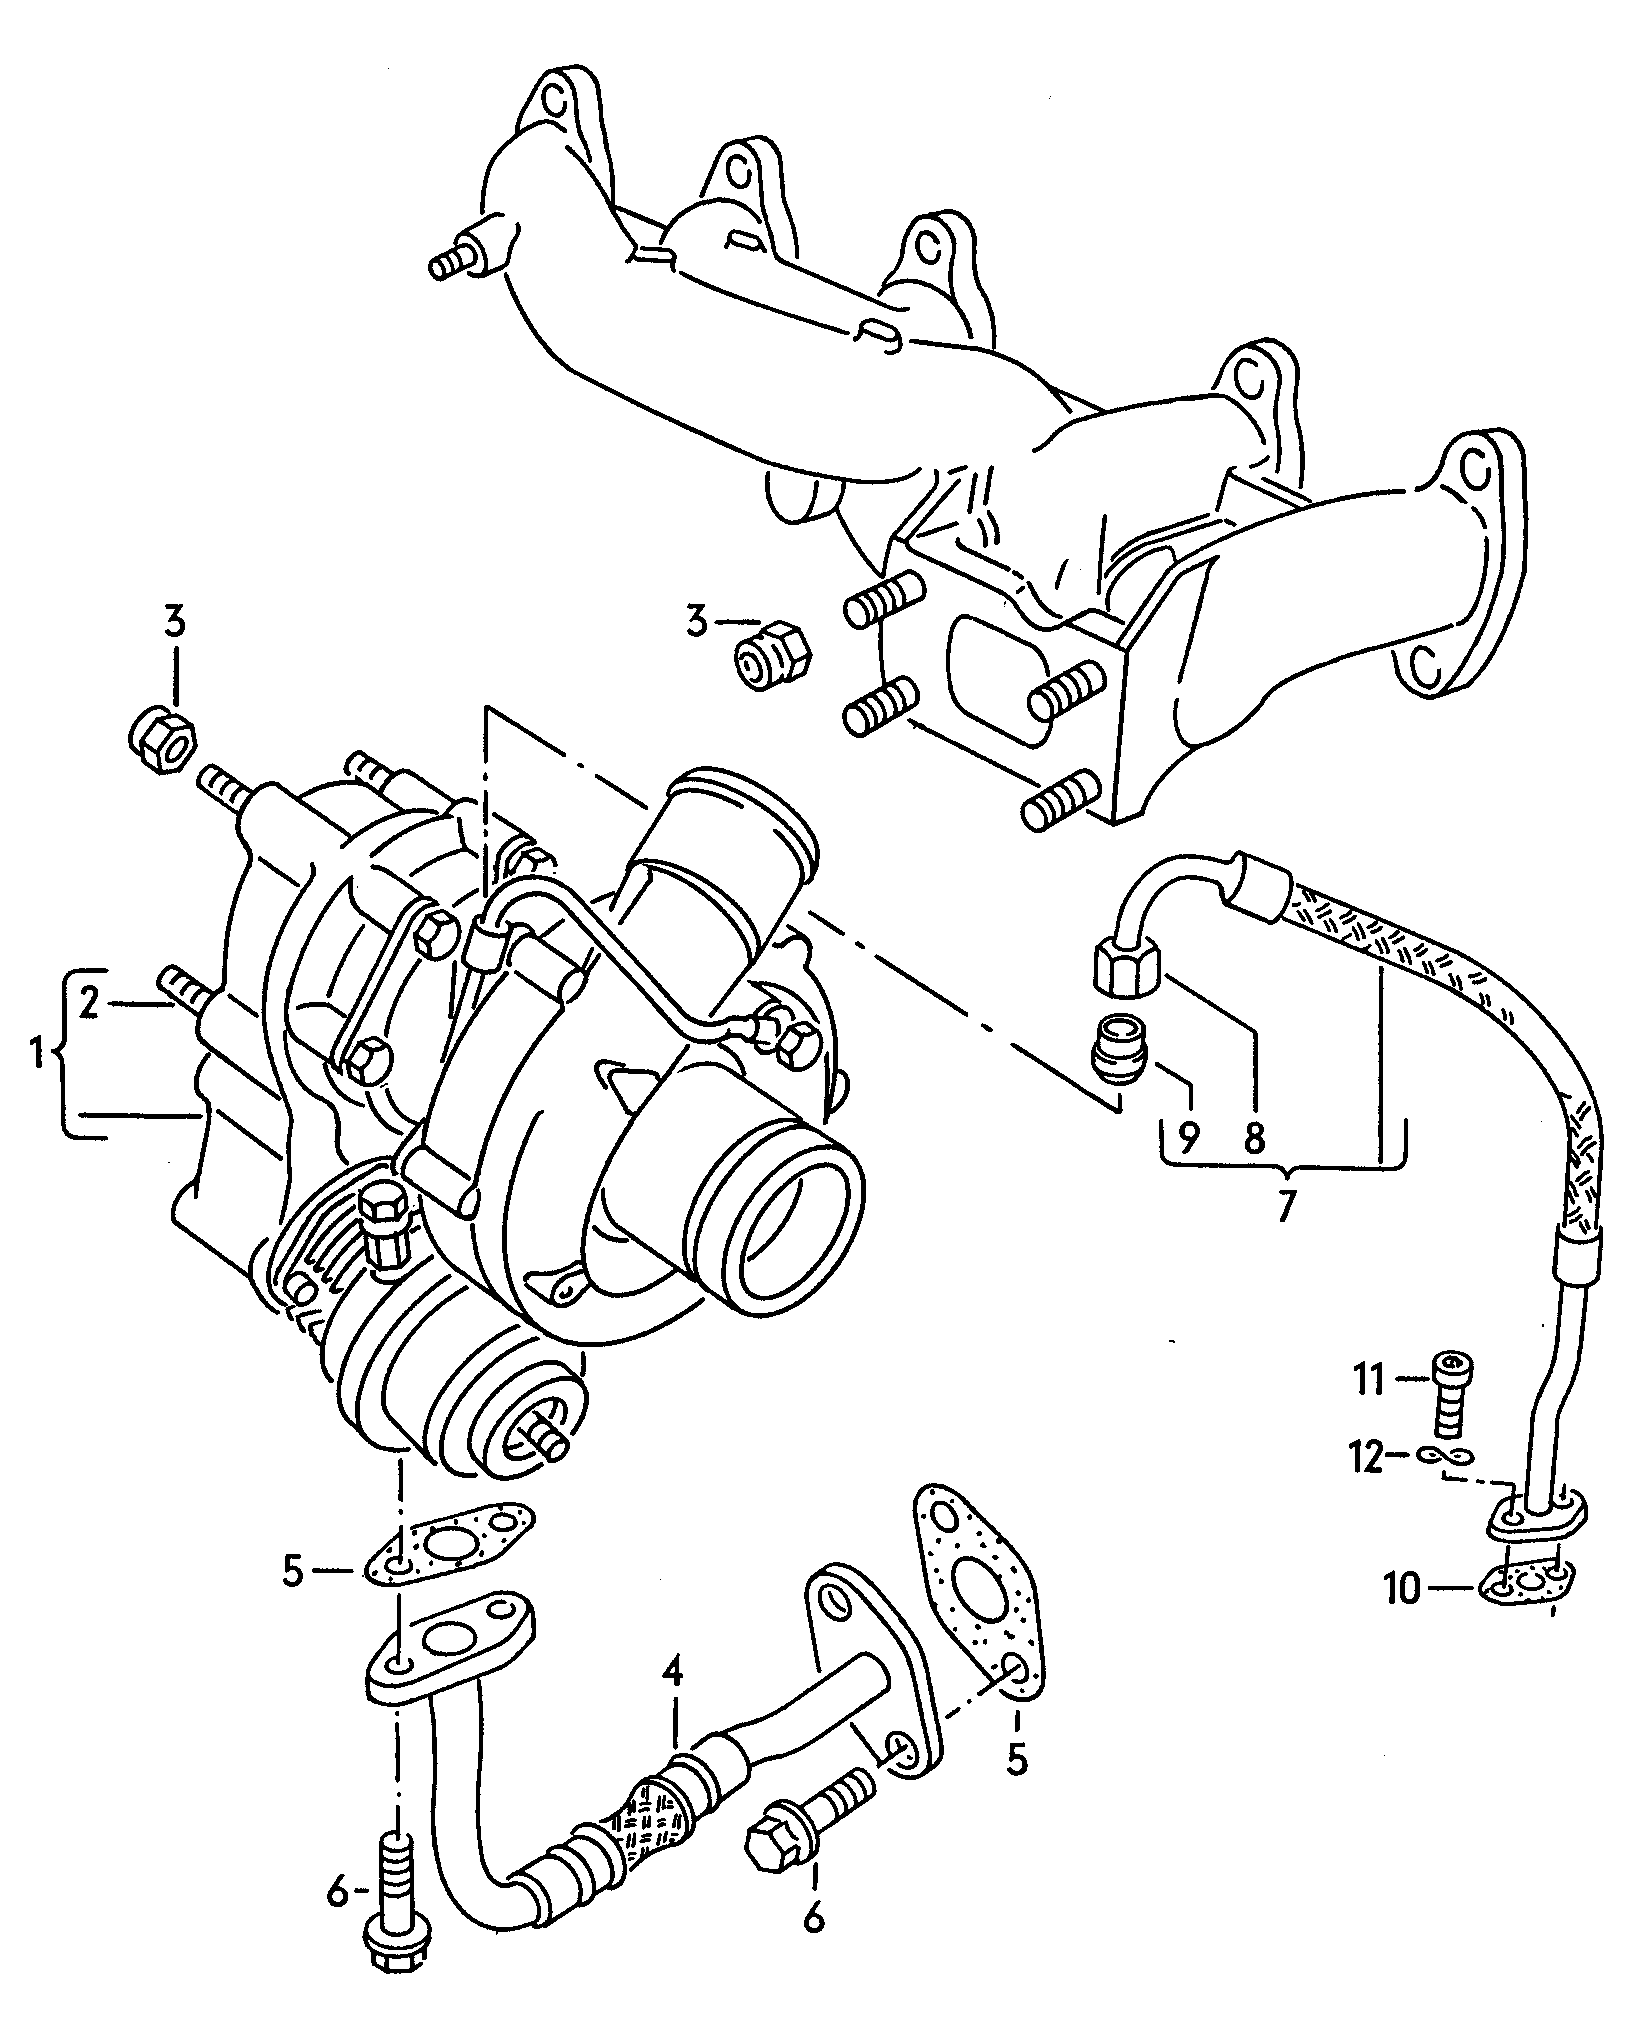 Exhaust gas turbocharger 2.0 Ltr. - Audi 100/Avant - a100